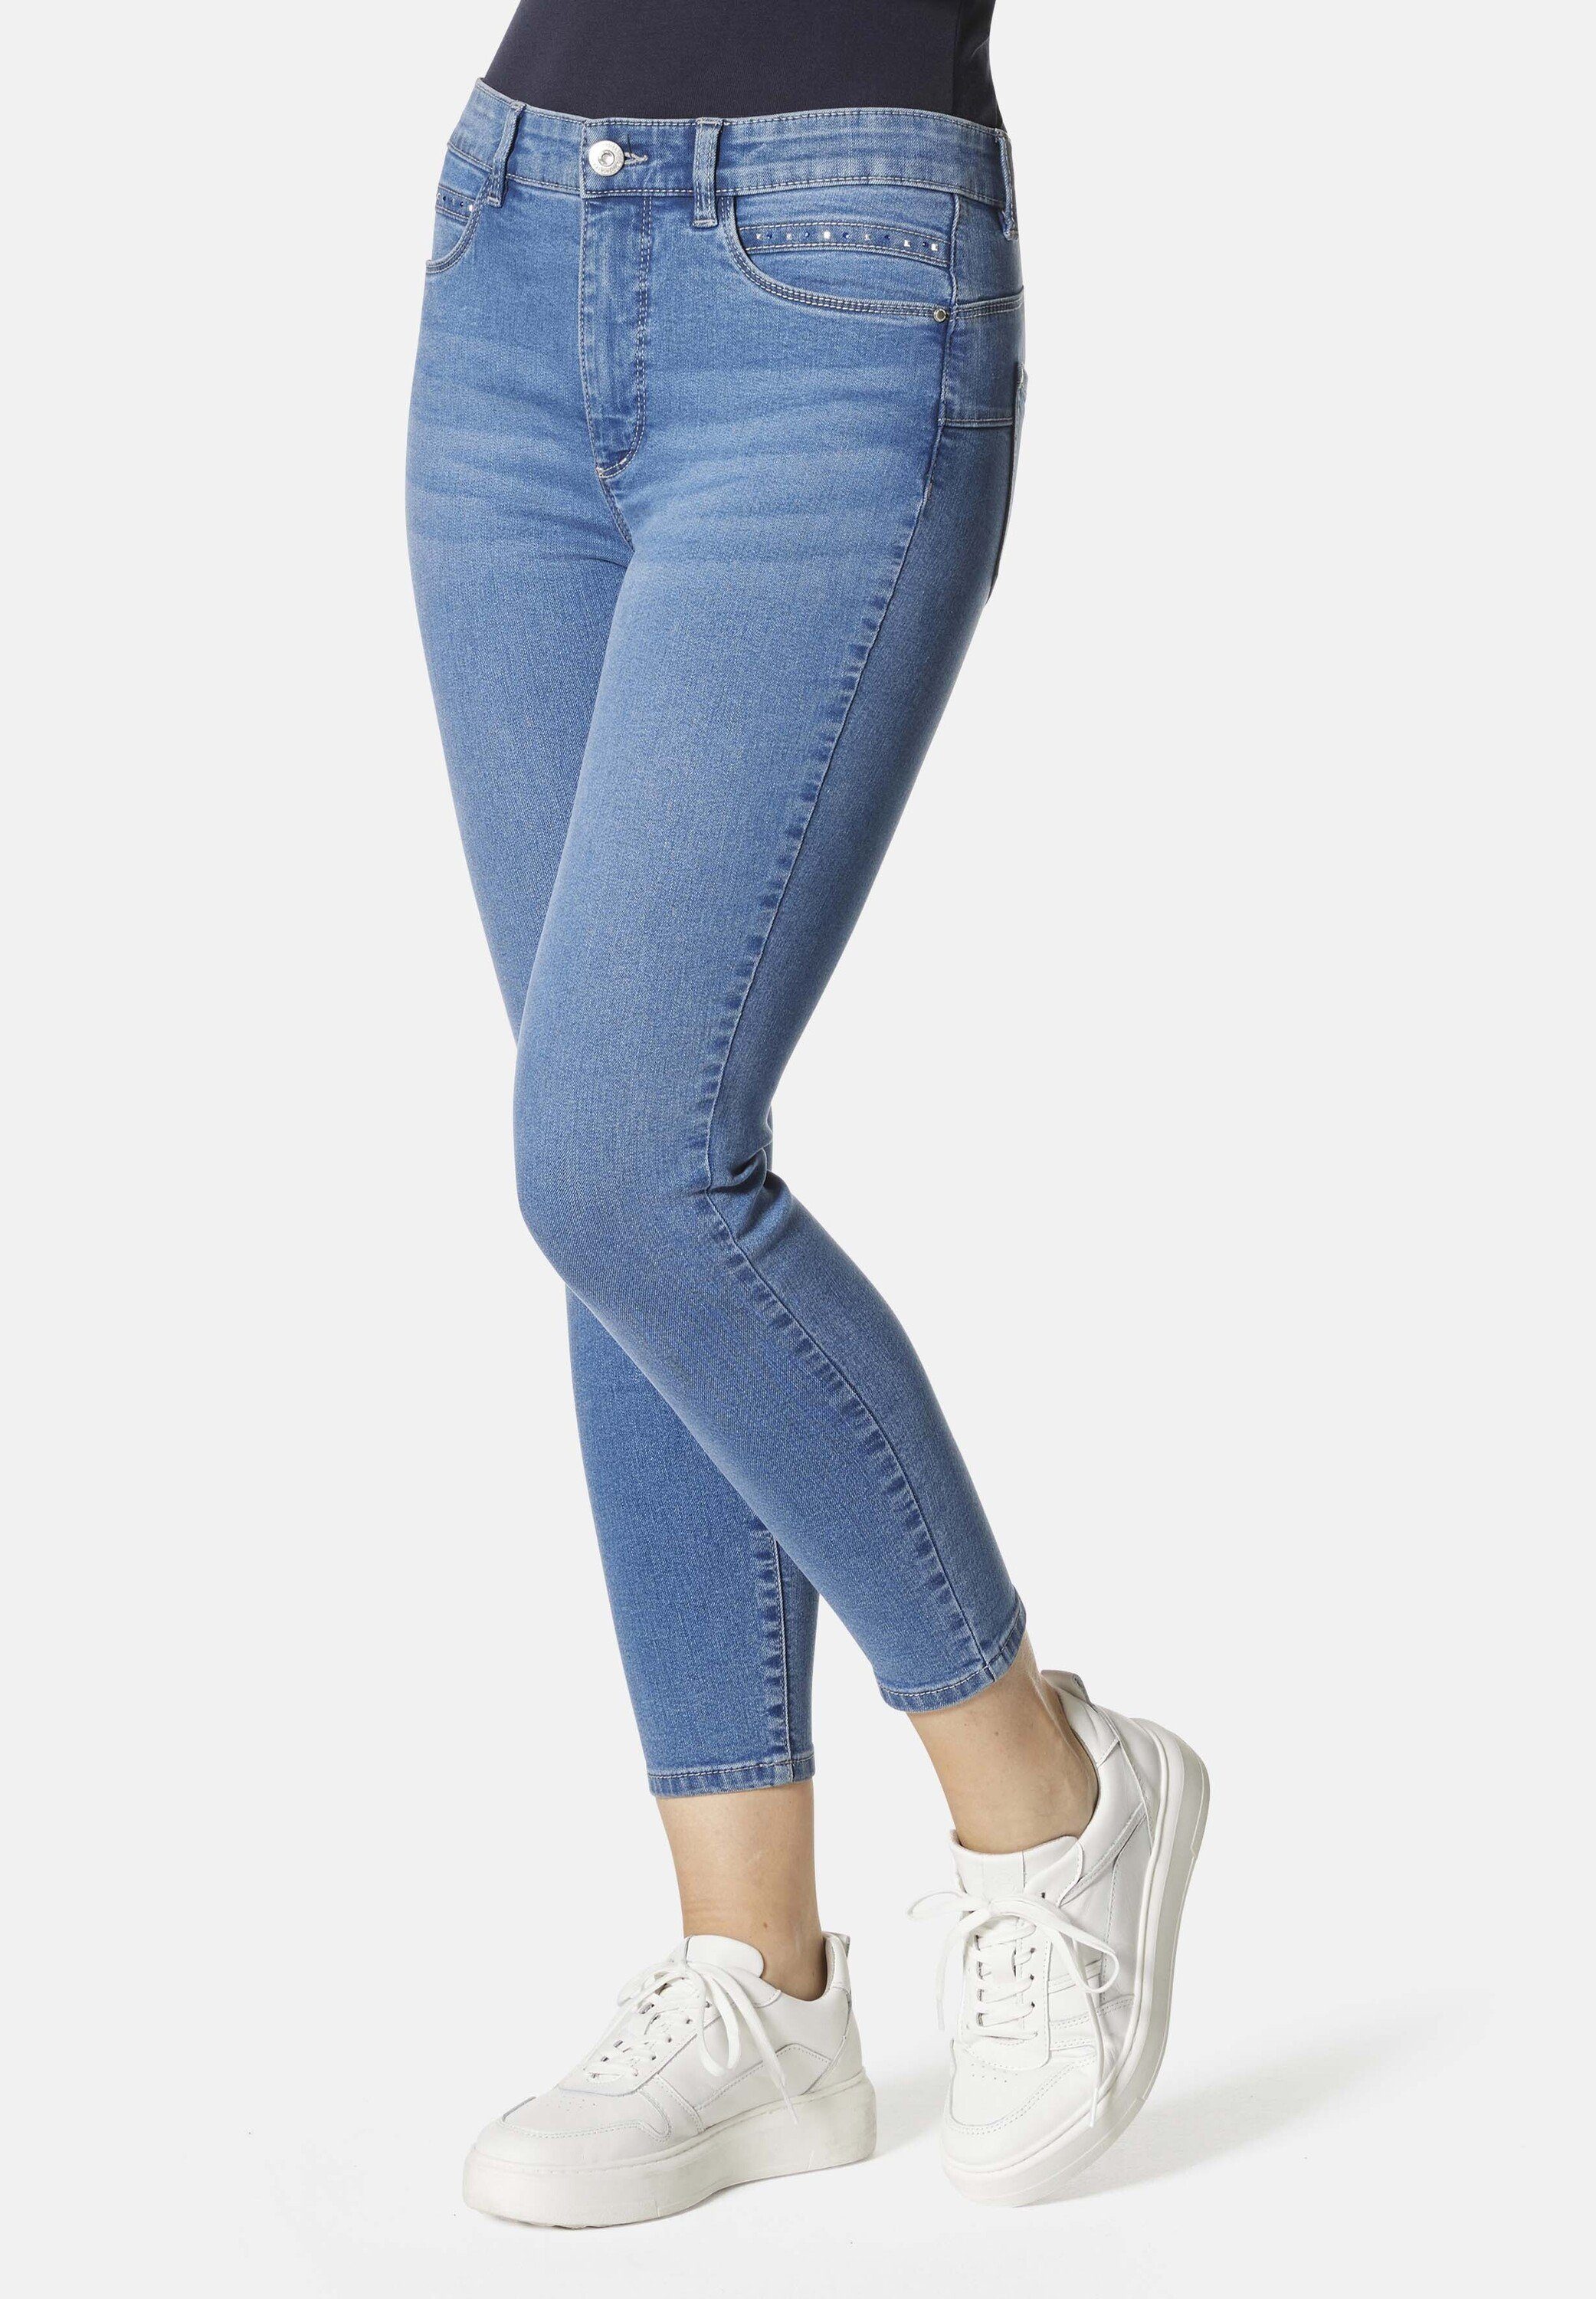 Rio Season classic STOOKER blue 5-Pocket-Jeans WOMEN Fit Skinny Denim